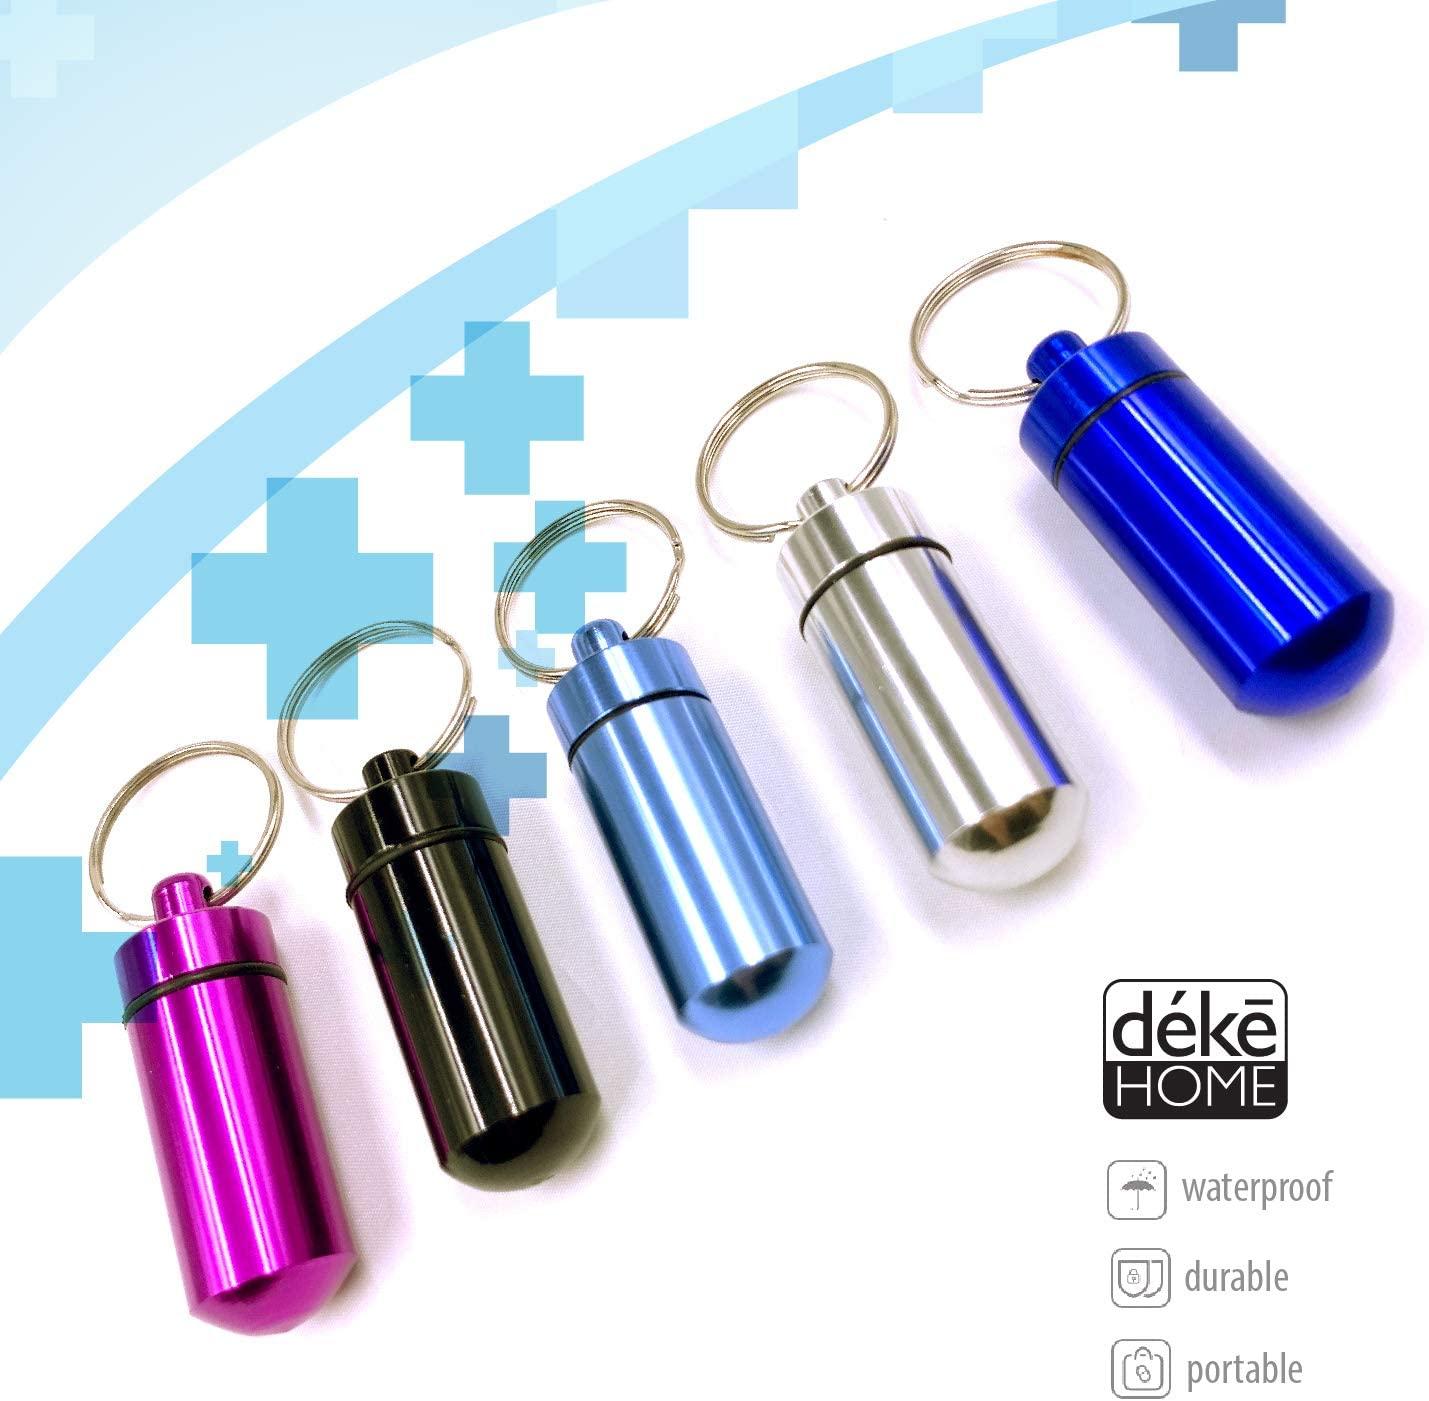 Waterproof Pill Bottle Aluminum, 8pcs Outdoor Capsule Keychain